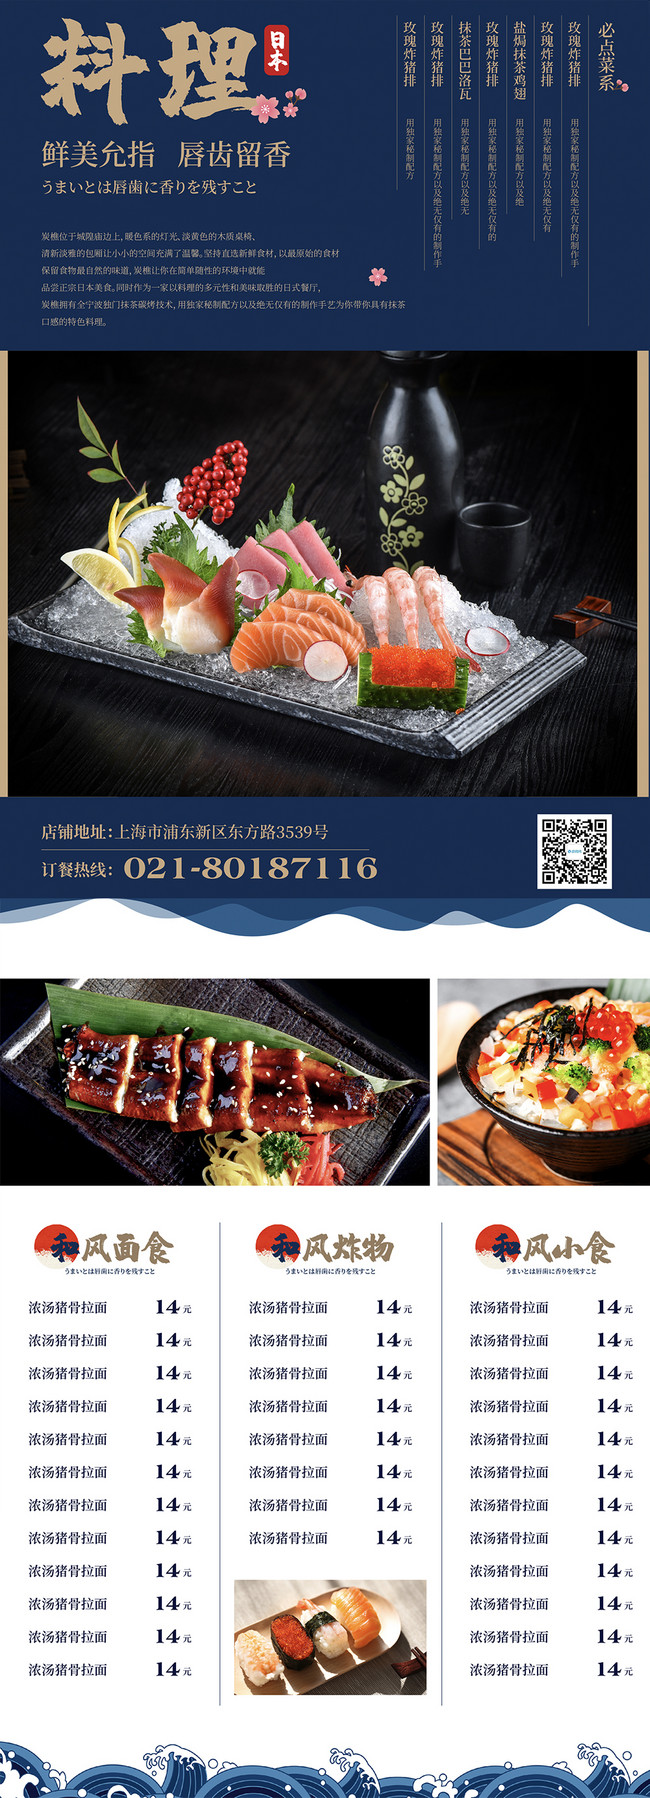 Japanese Restaurant Cuisine Promotion Menu Template Image Picture Free Download Lovepik Com